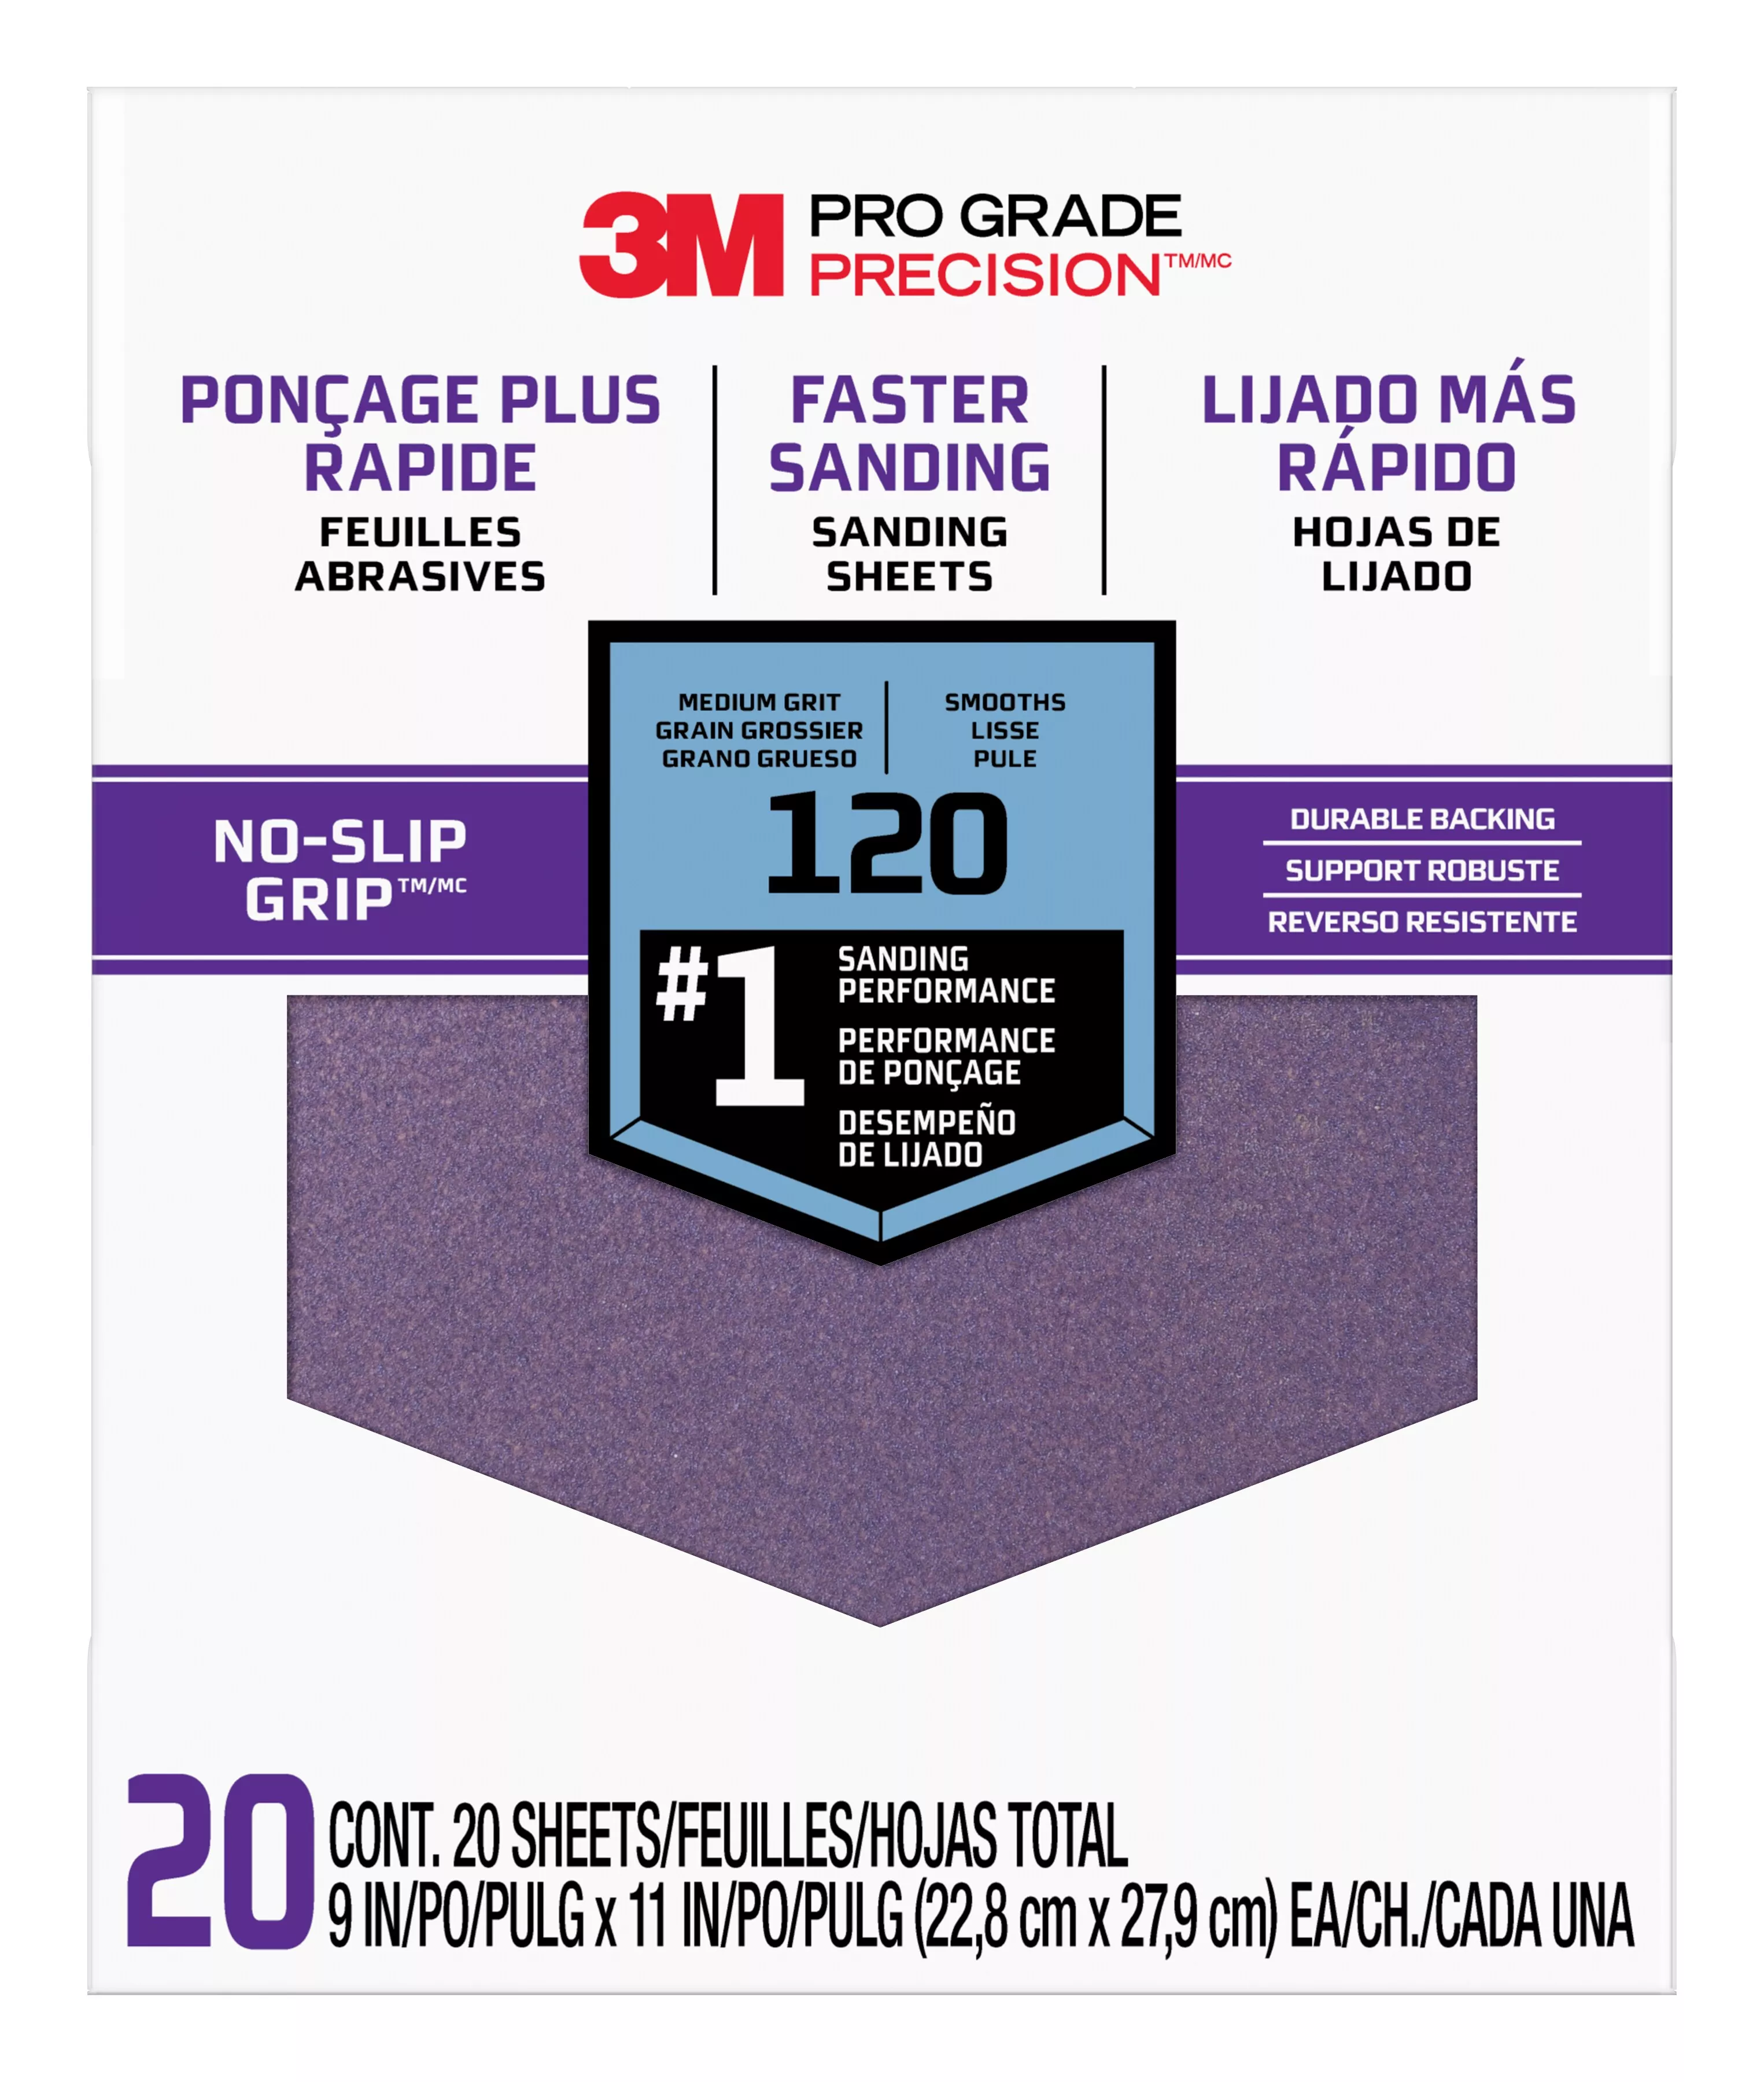 3M™ Pro Grade Precision™ Faster Sanding Sanding Sheets 120 grit Medium,
27120TRI-20, 9 in x 11 in, 20/pk